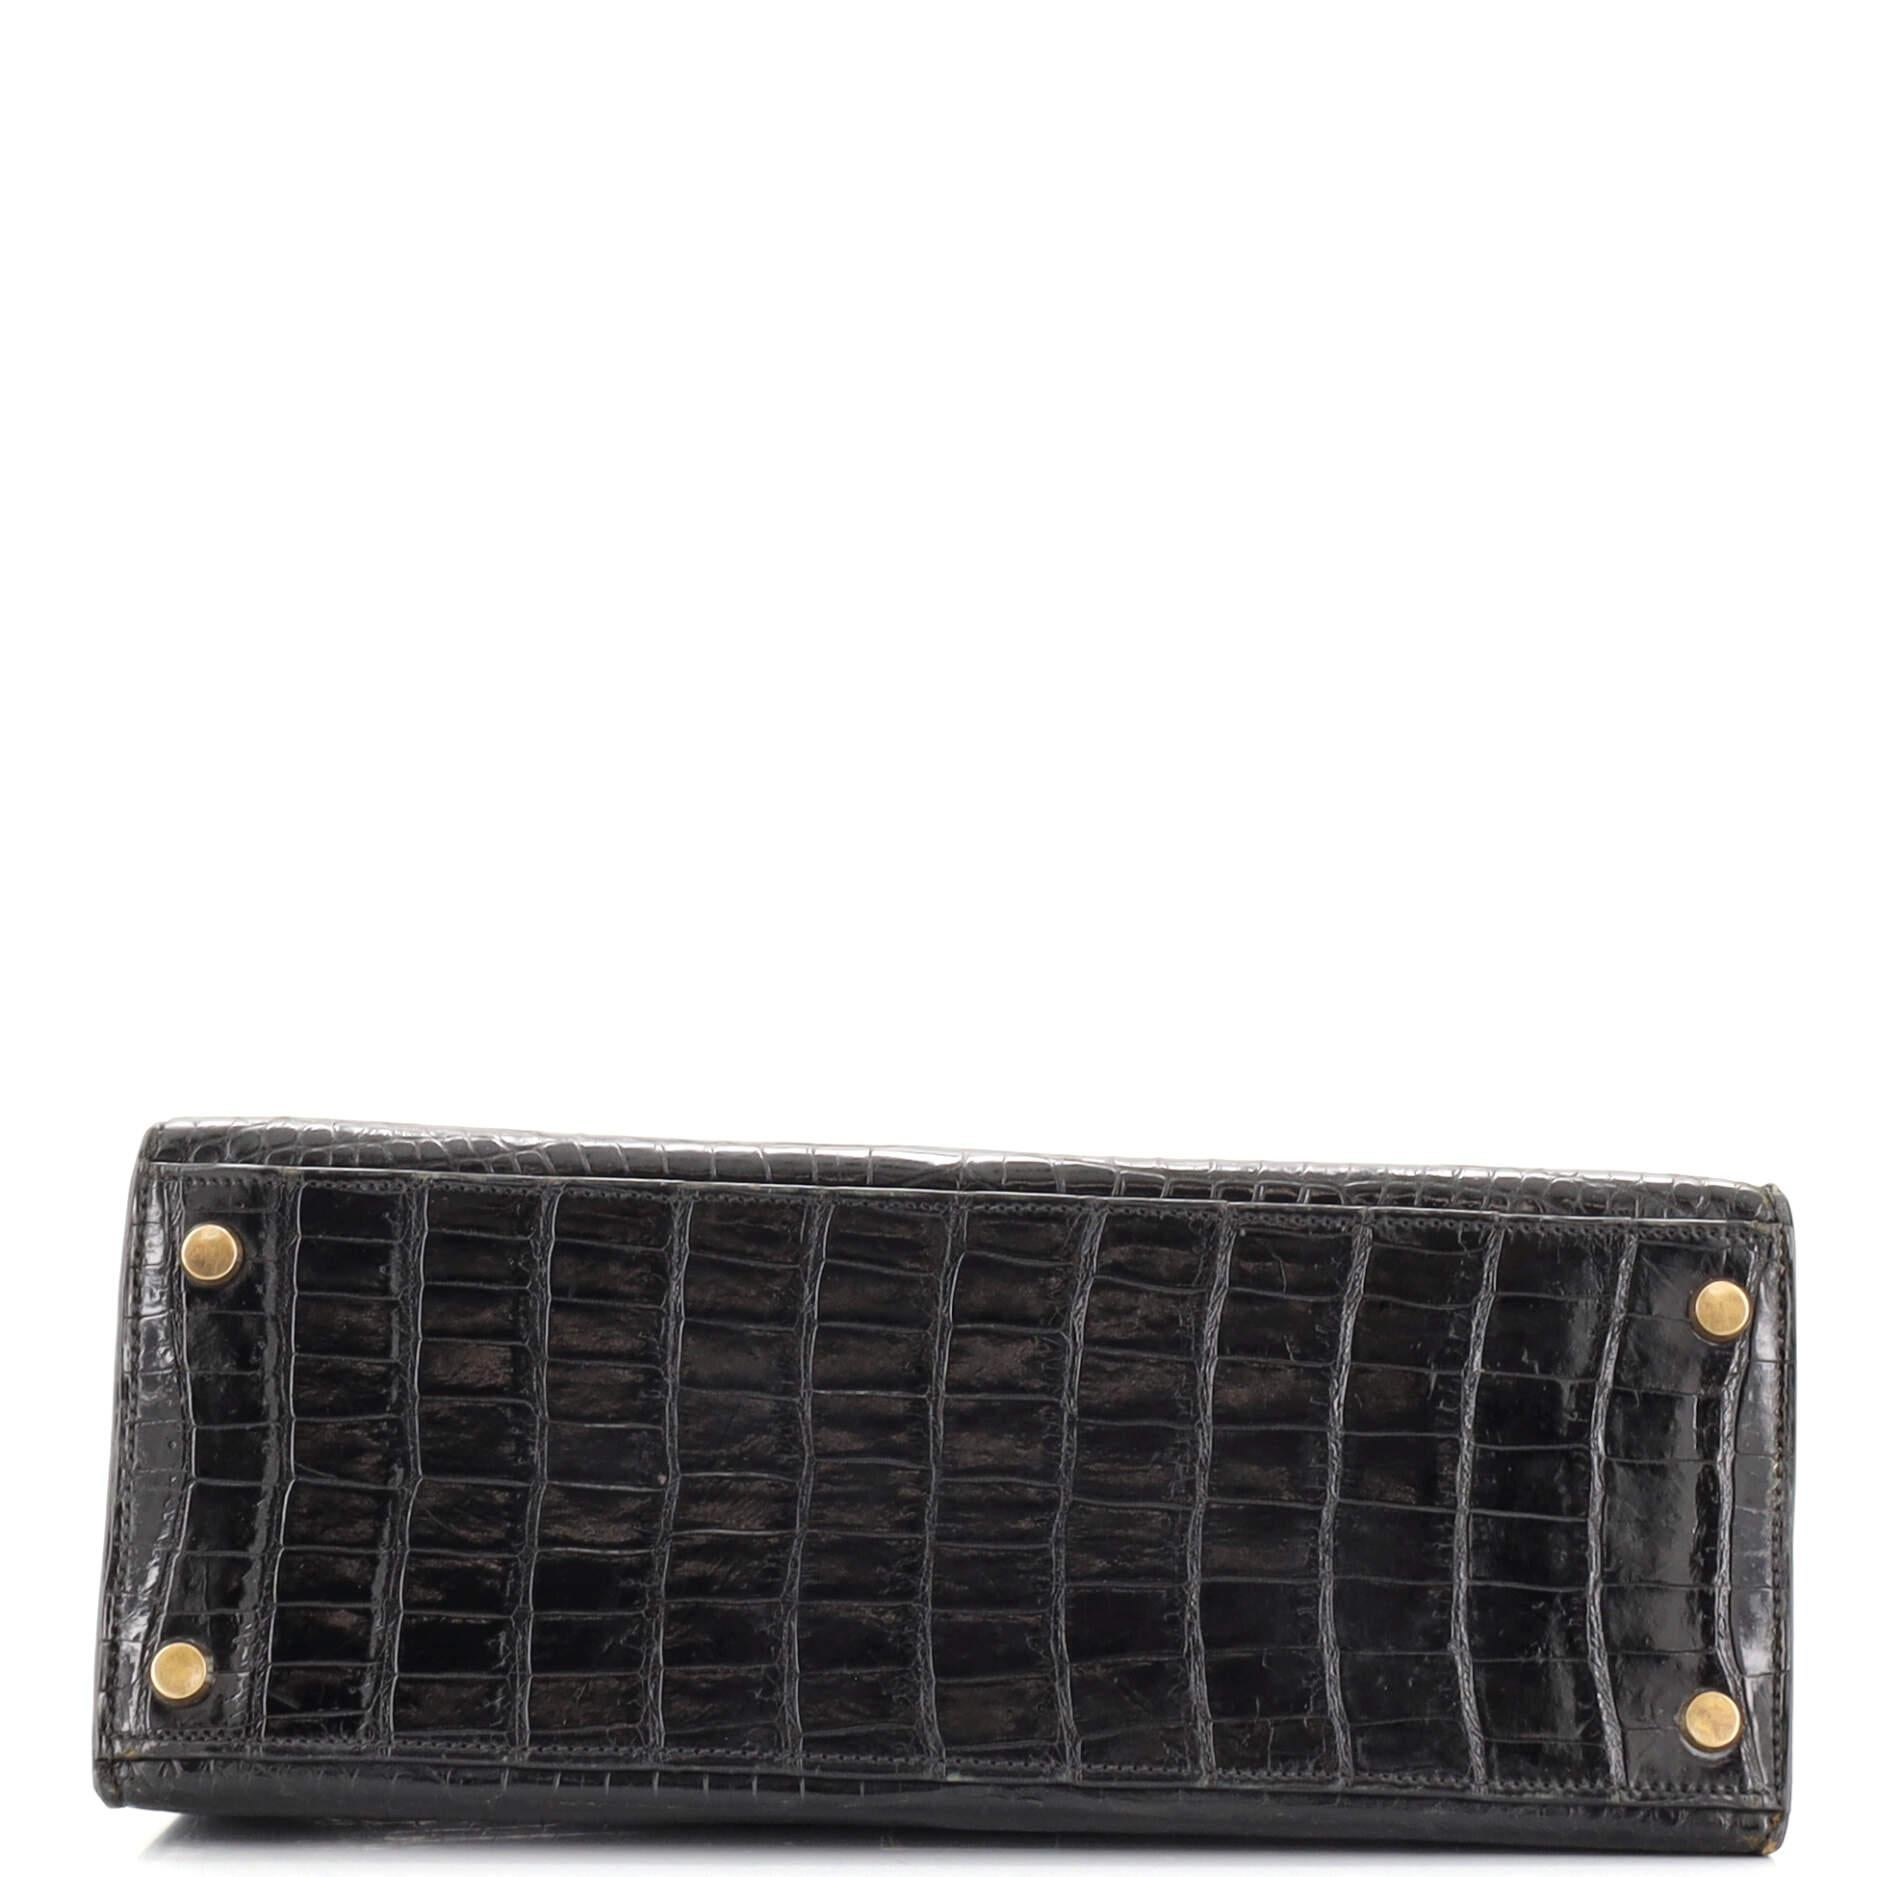 Hermes Kelly Handbag Noir Shiny Porosus Crocodile with Gold Hardware 32 1